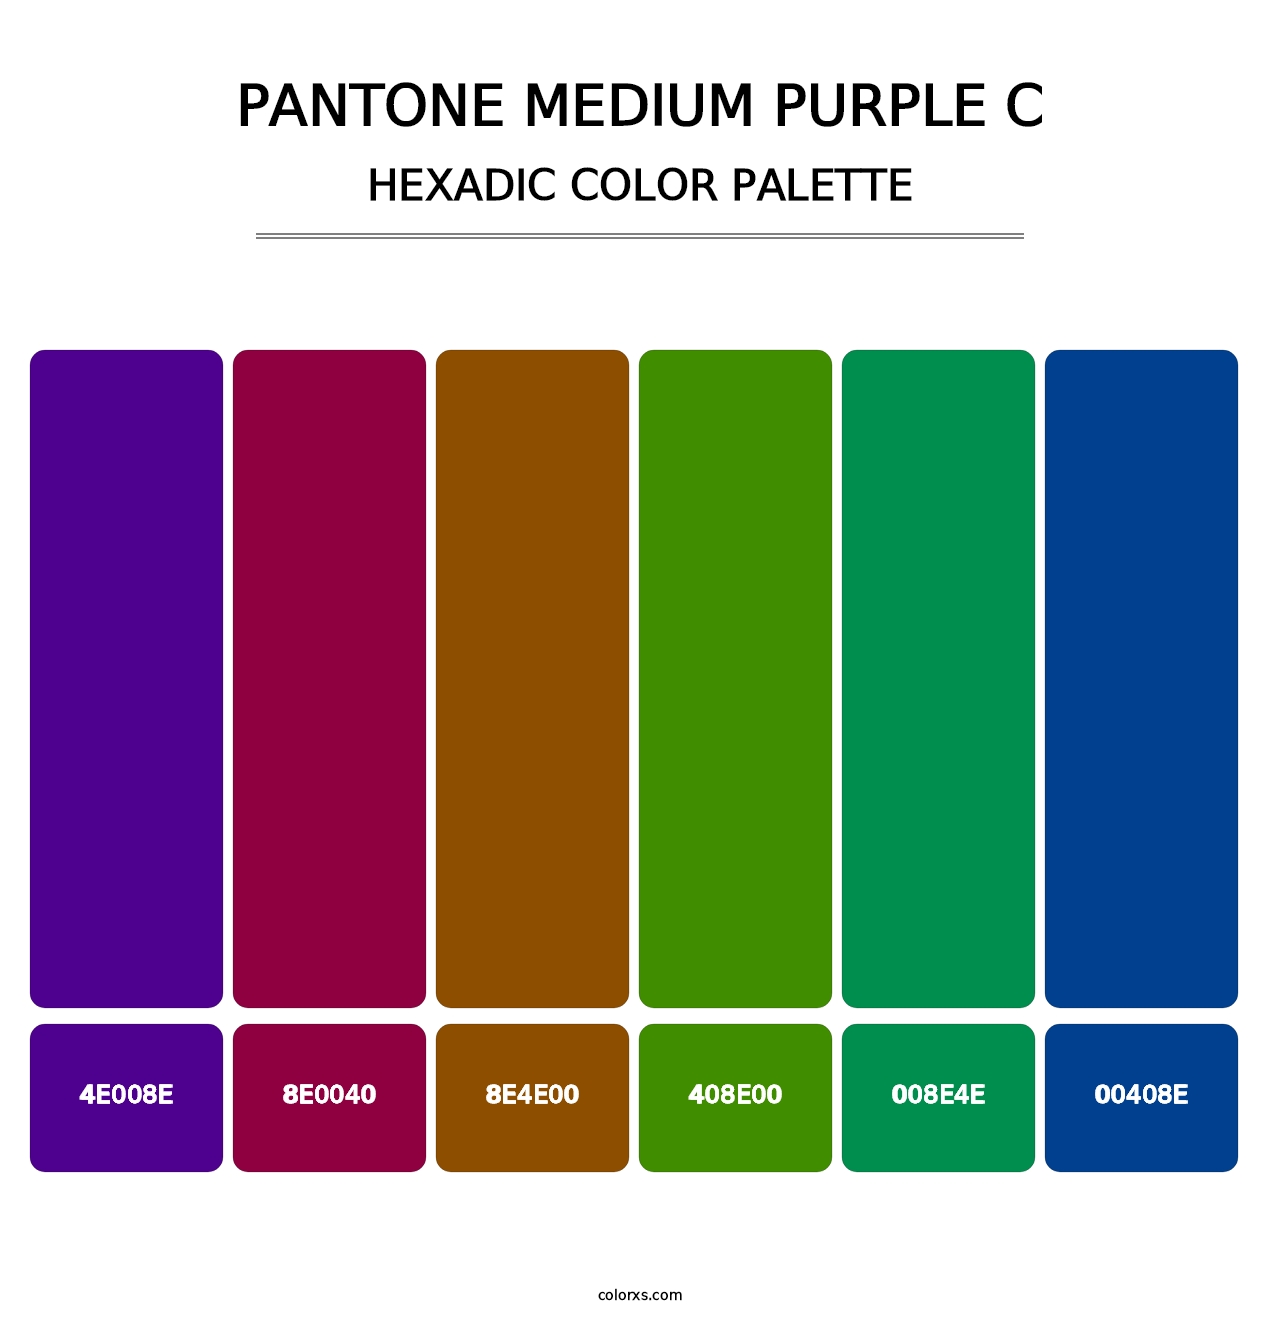 PANTONE Medium Purple C - Hexadic Color Palette